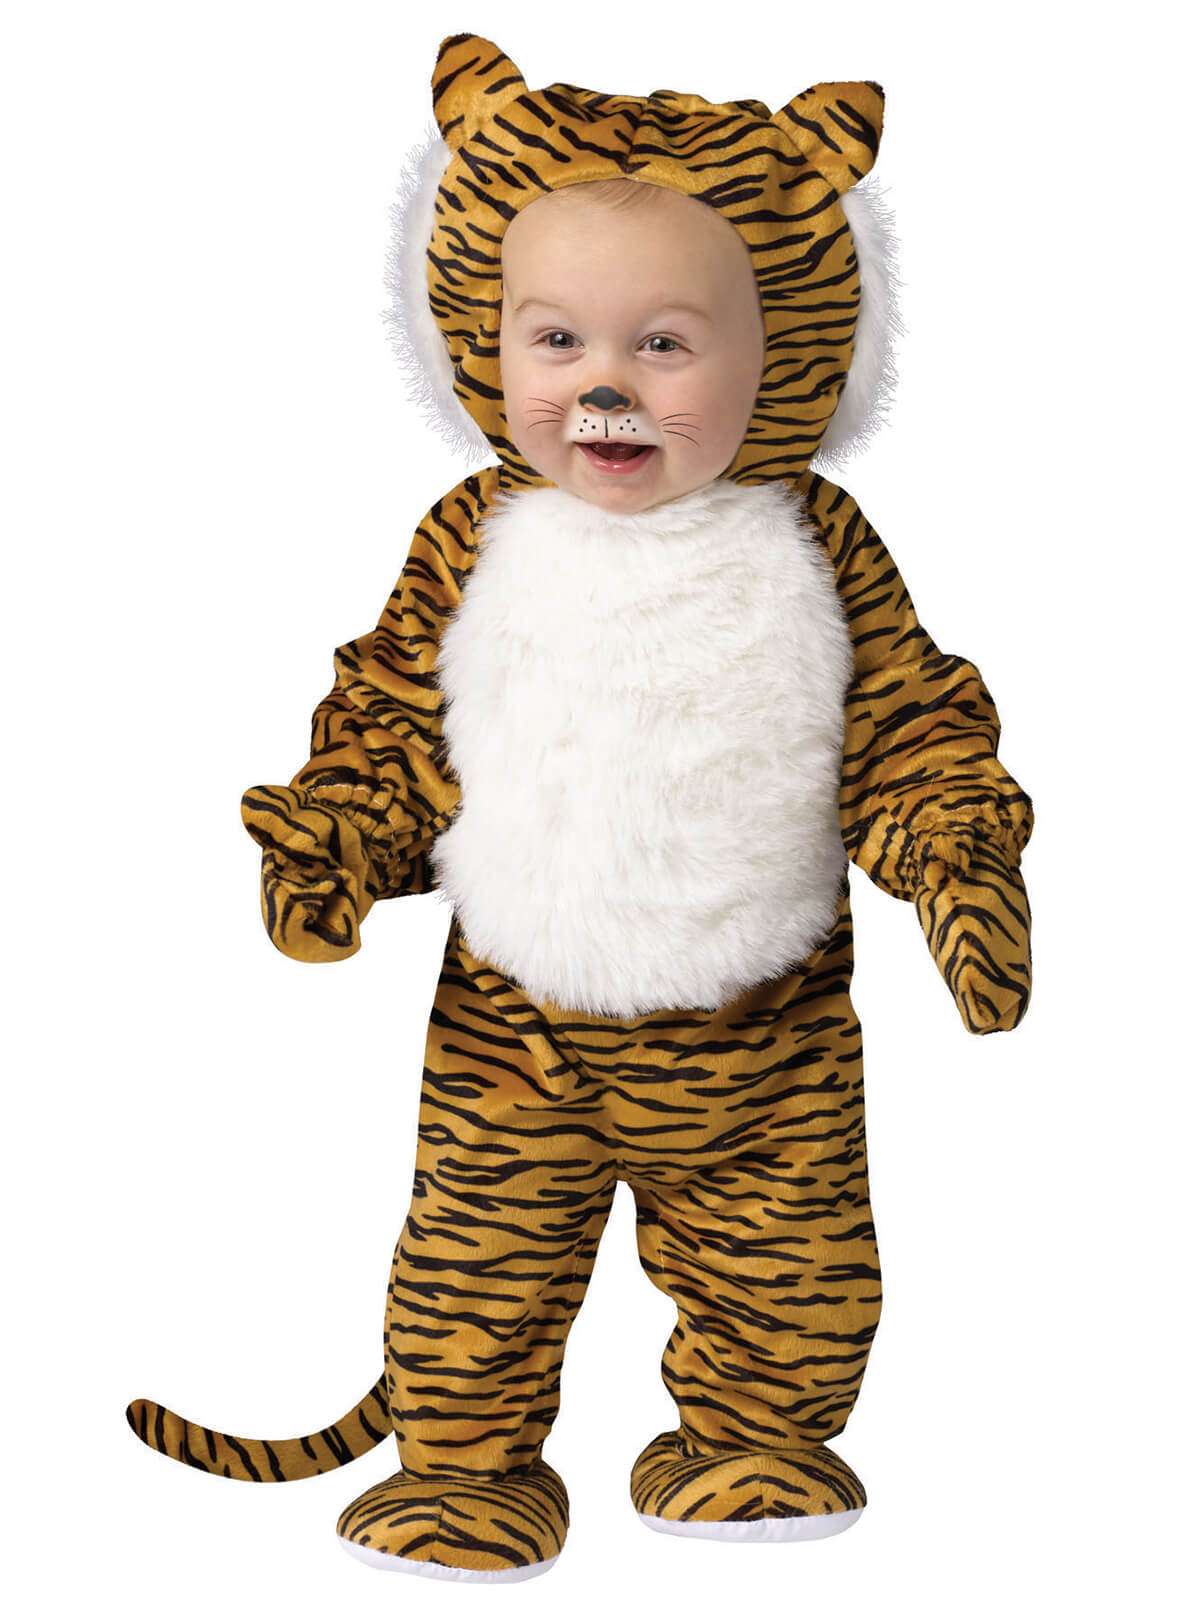 Toddler Cuddly Tiger Costume